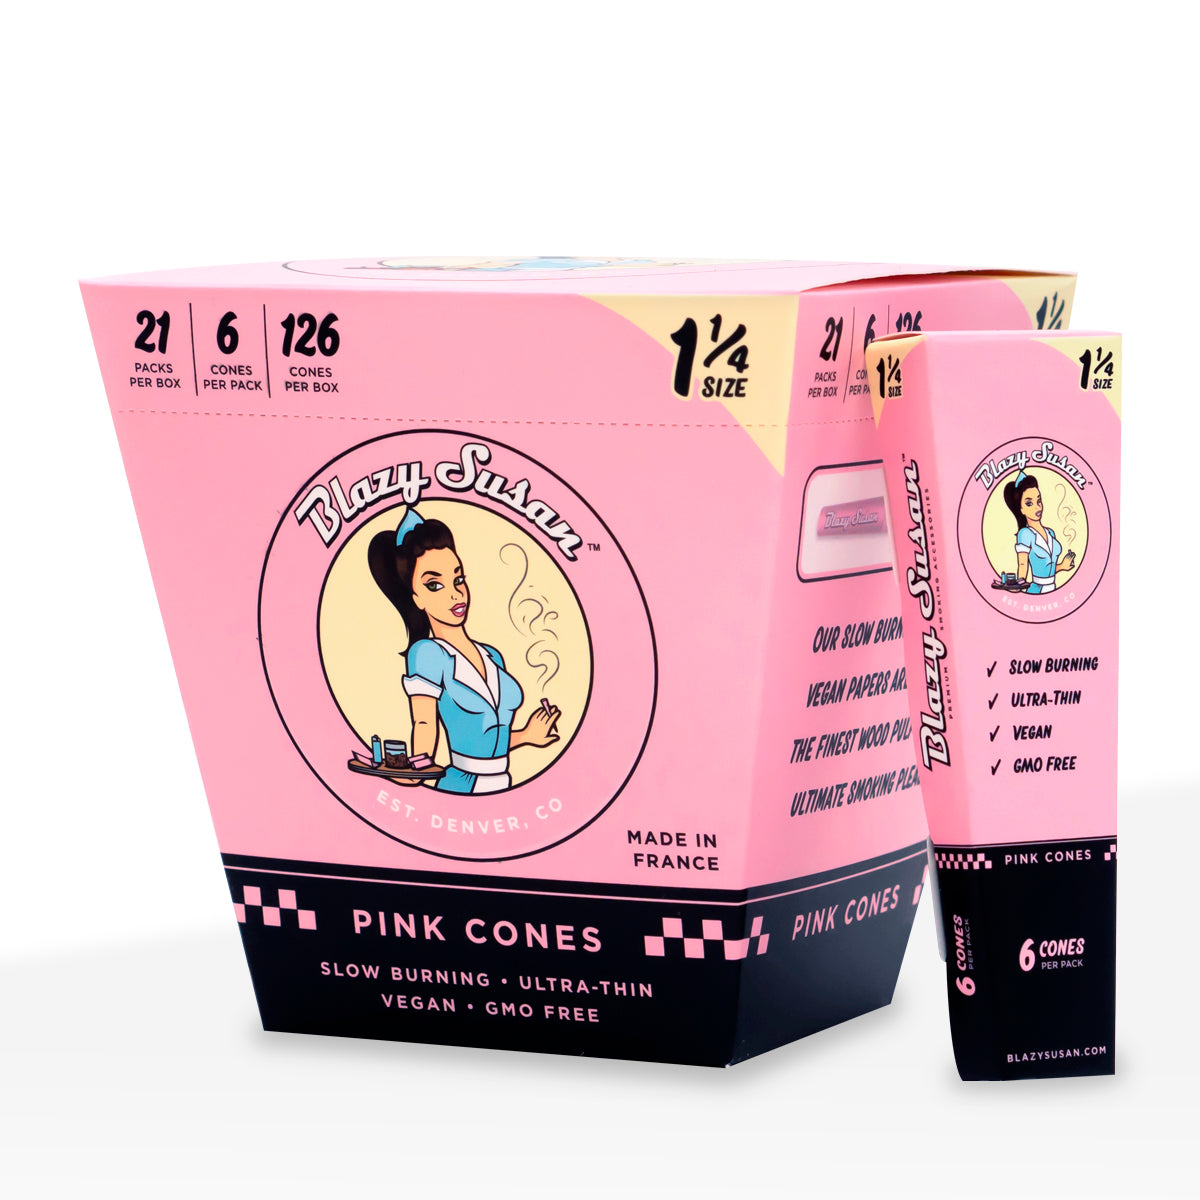 Blazy Susan Pink Pre-Rolled Cones 1 1/4 - 21 Pack